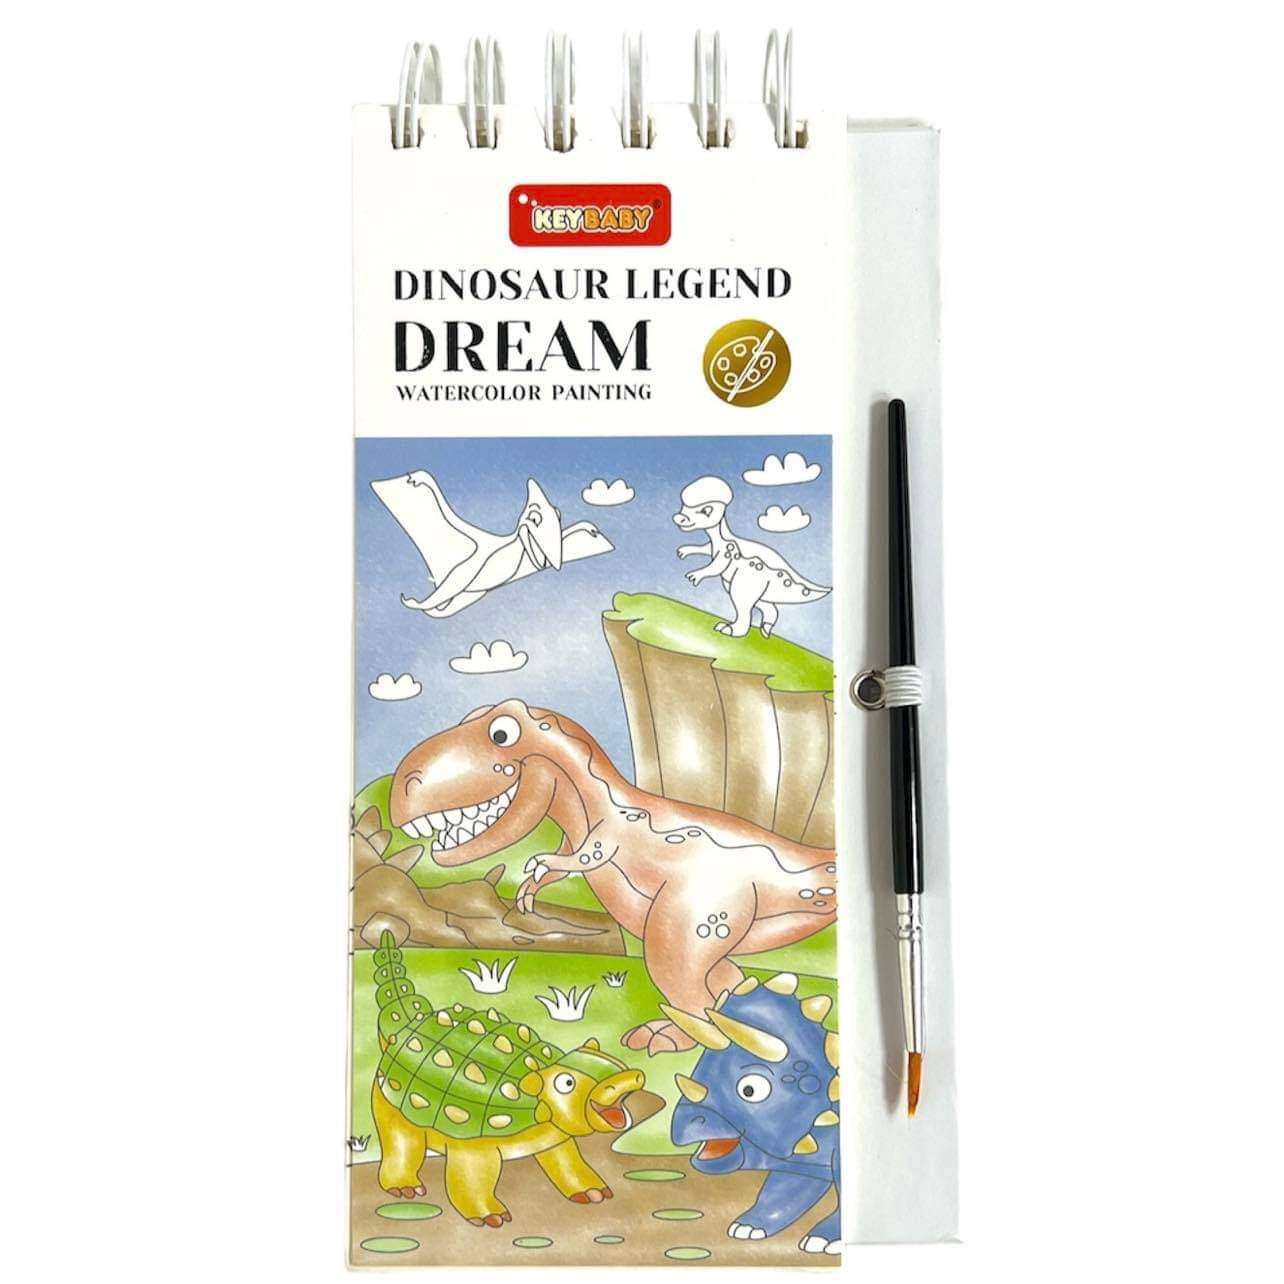 Dream Watercolor Painting Dinsosaur Legend || مجموعة رسمات تلوين مائي الديناصورات